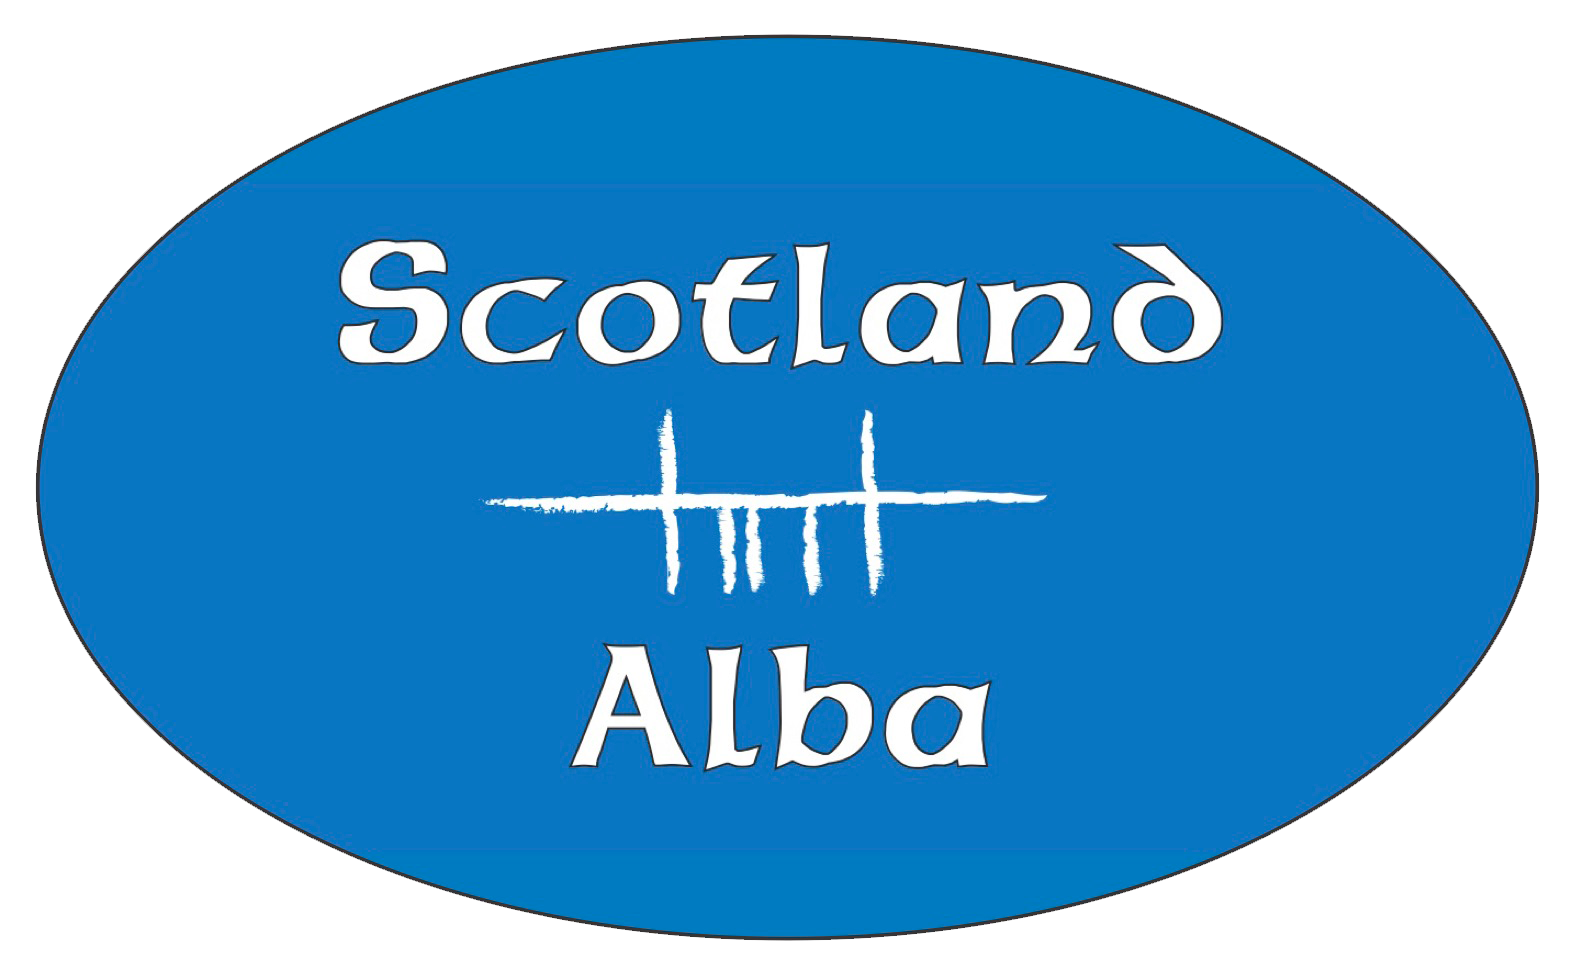 Ogham Art Scotland Alba Bumper Sticker